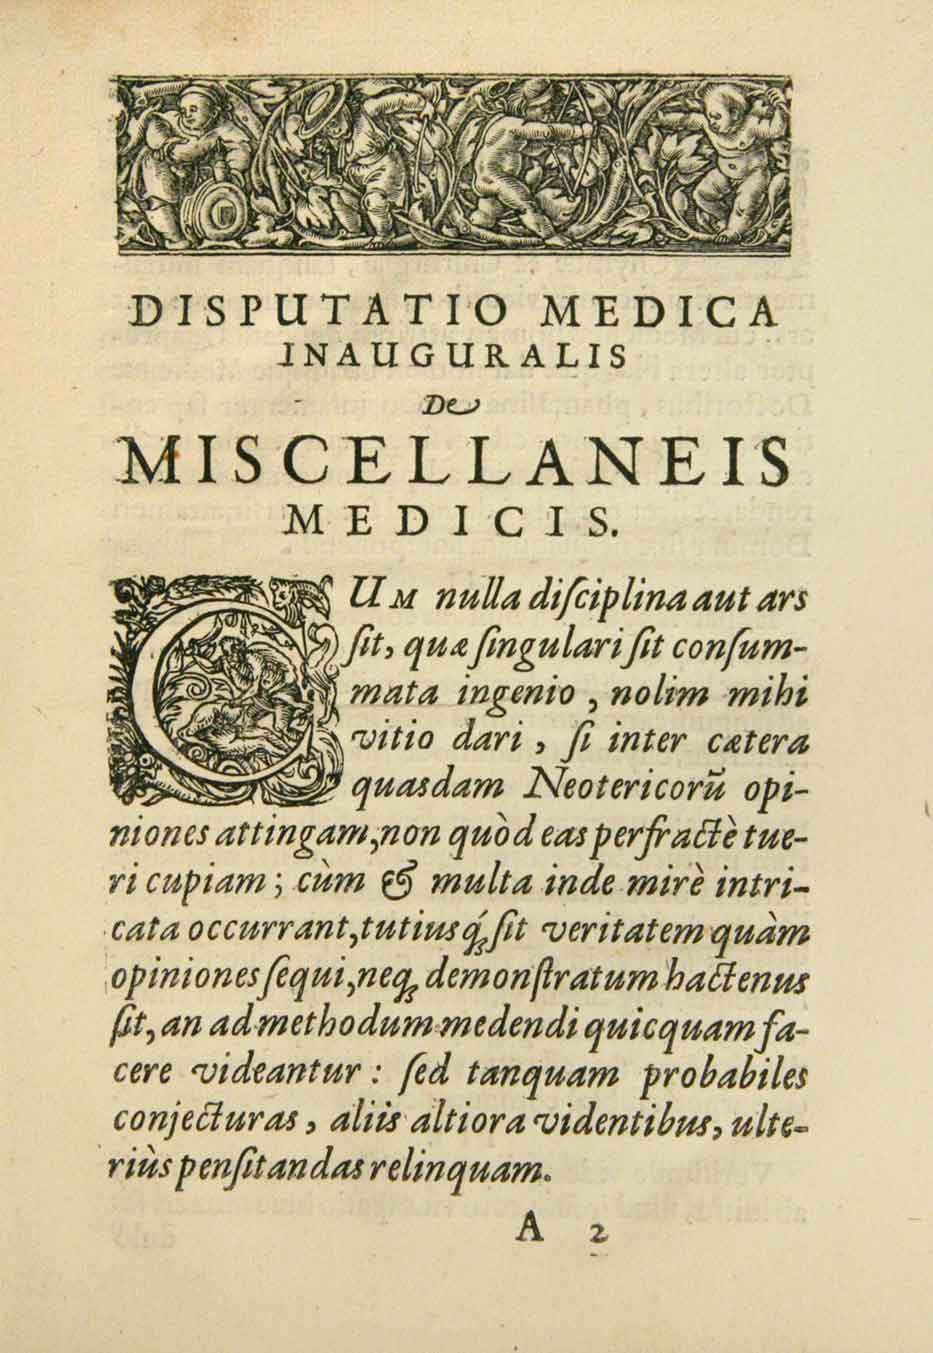 Hannasch, Caspar - Disputatio medica inauguralis de miscellaneis medicis Diss. 